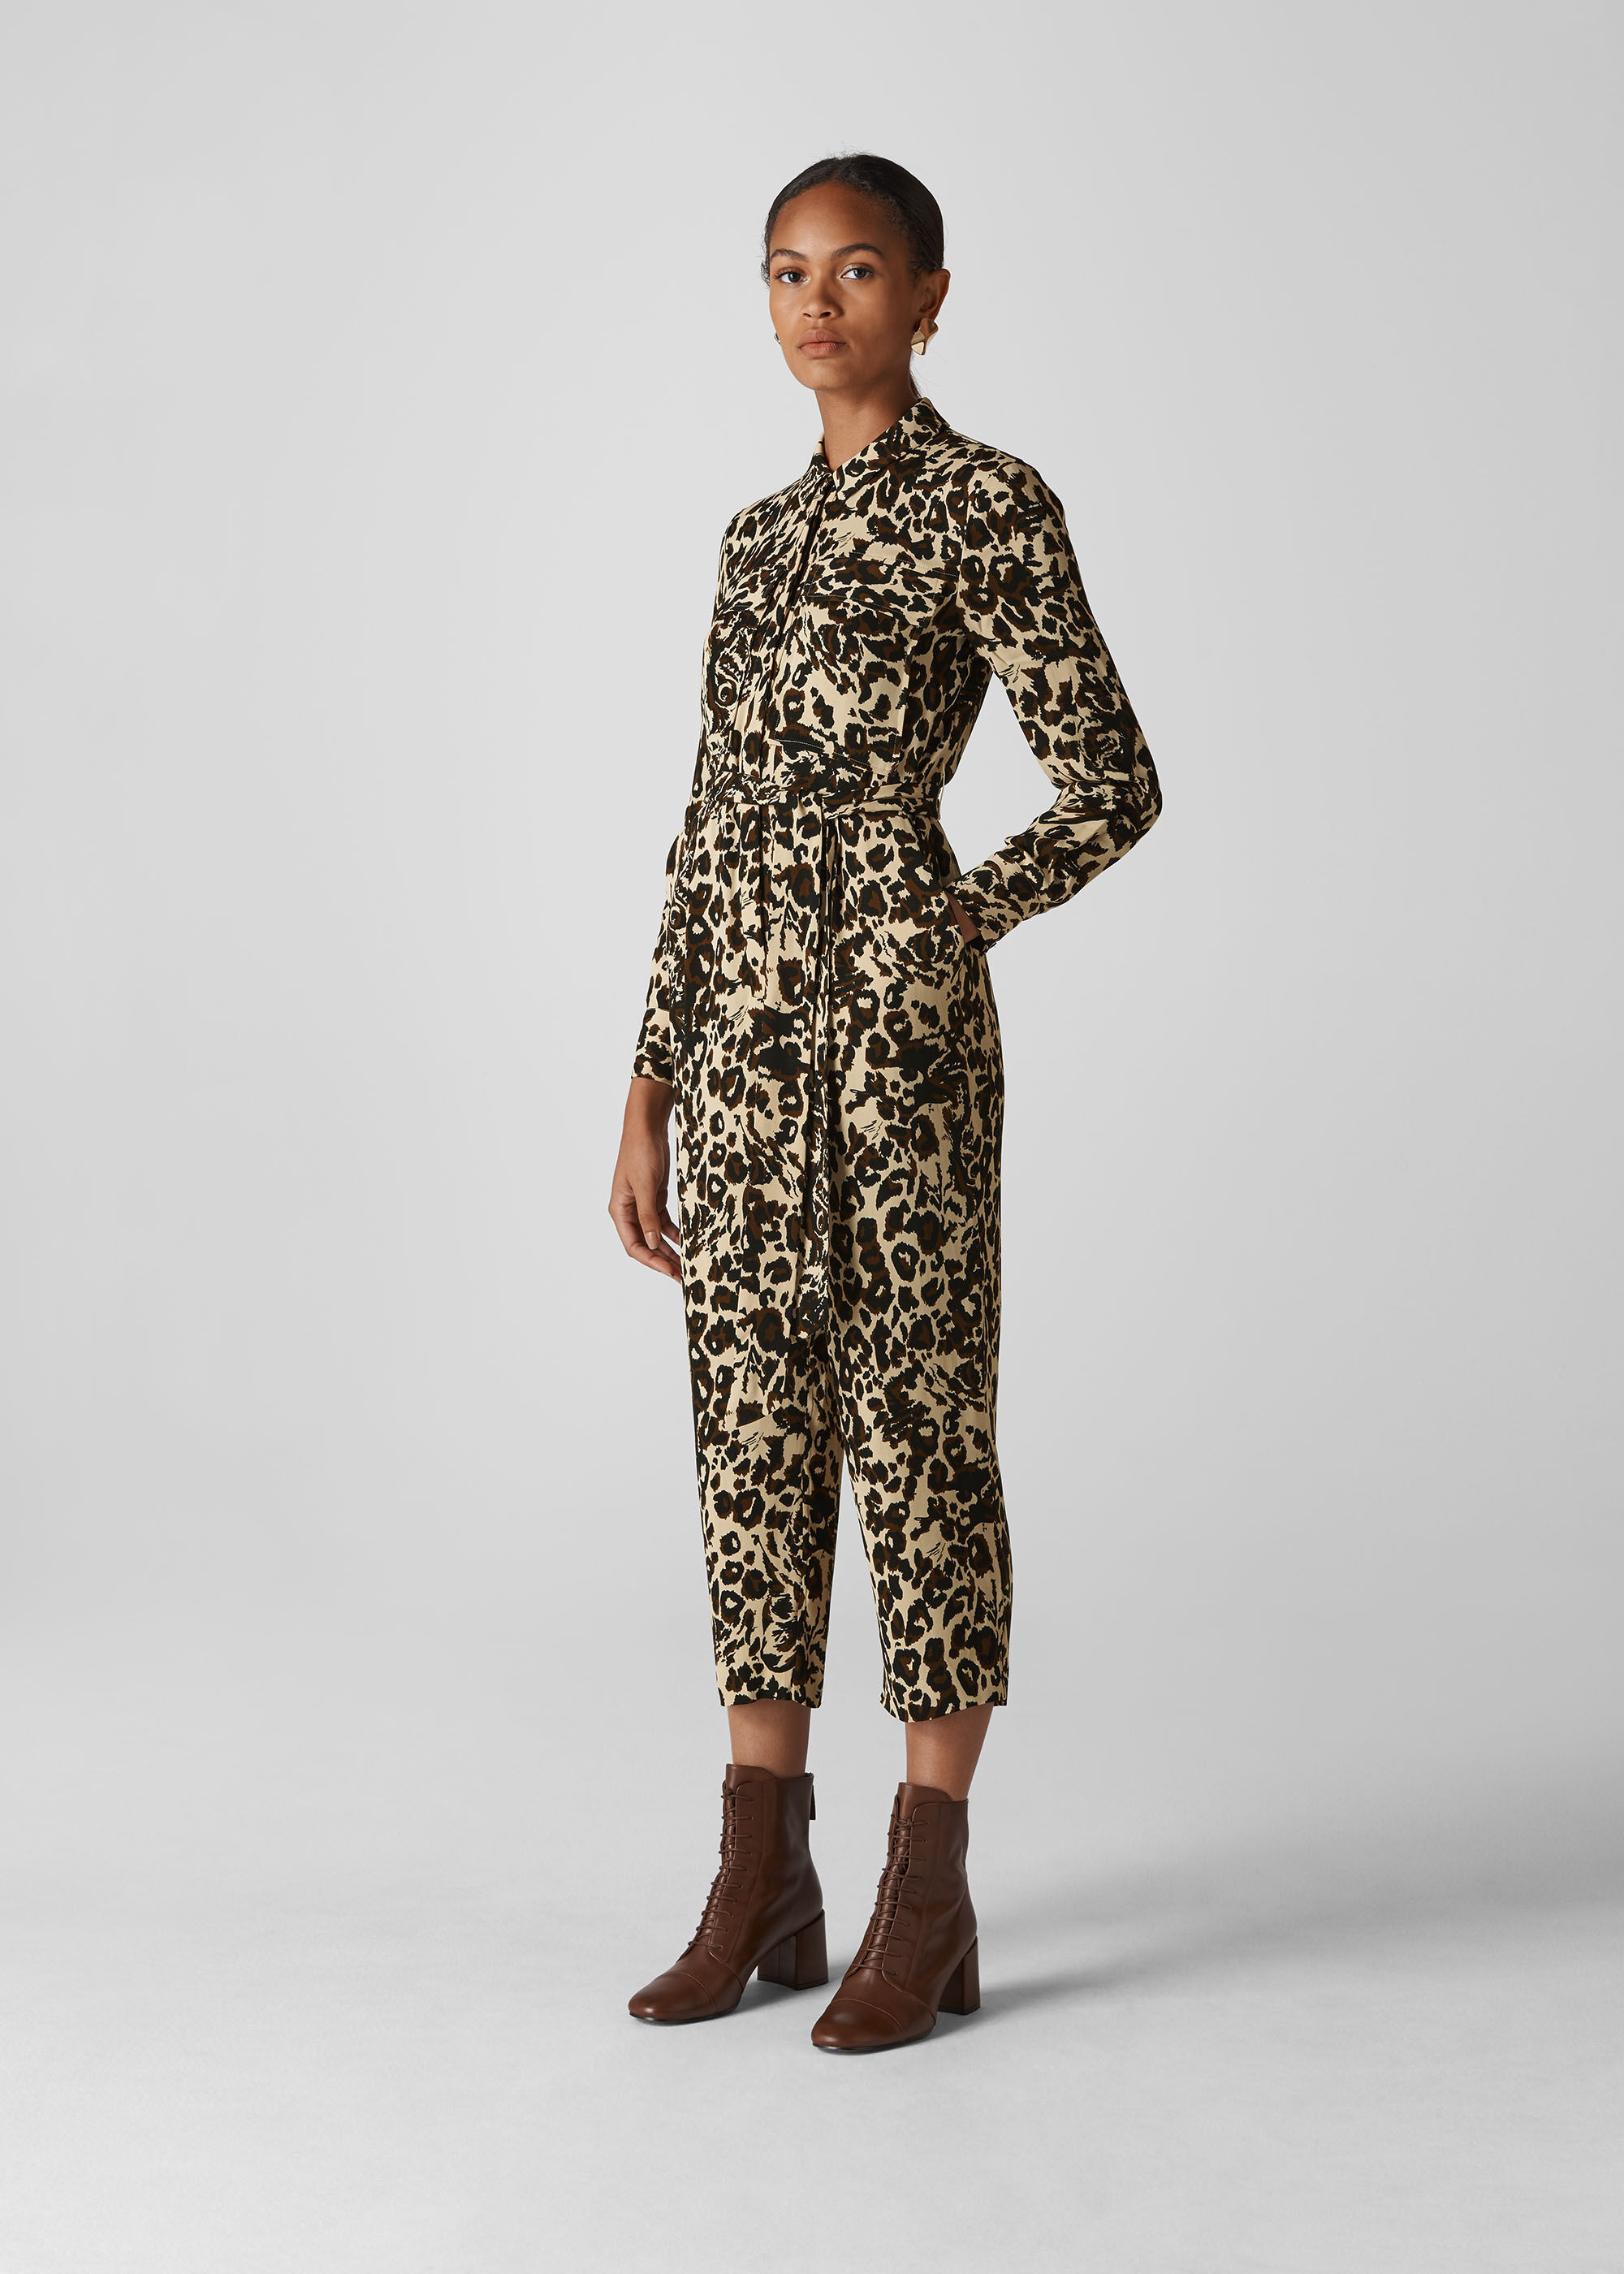 whistles leopard print dress